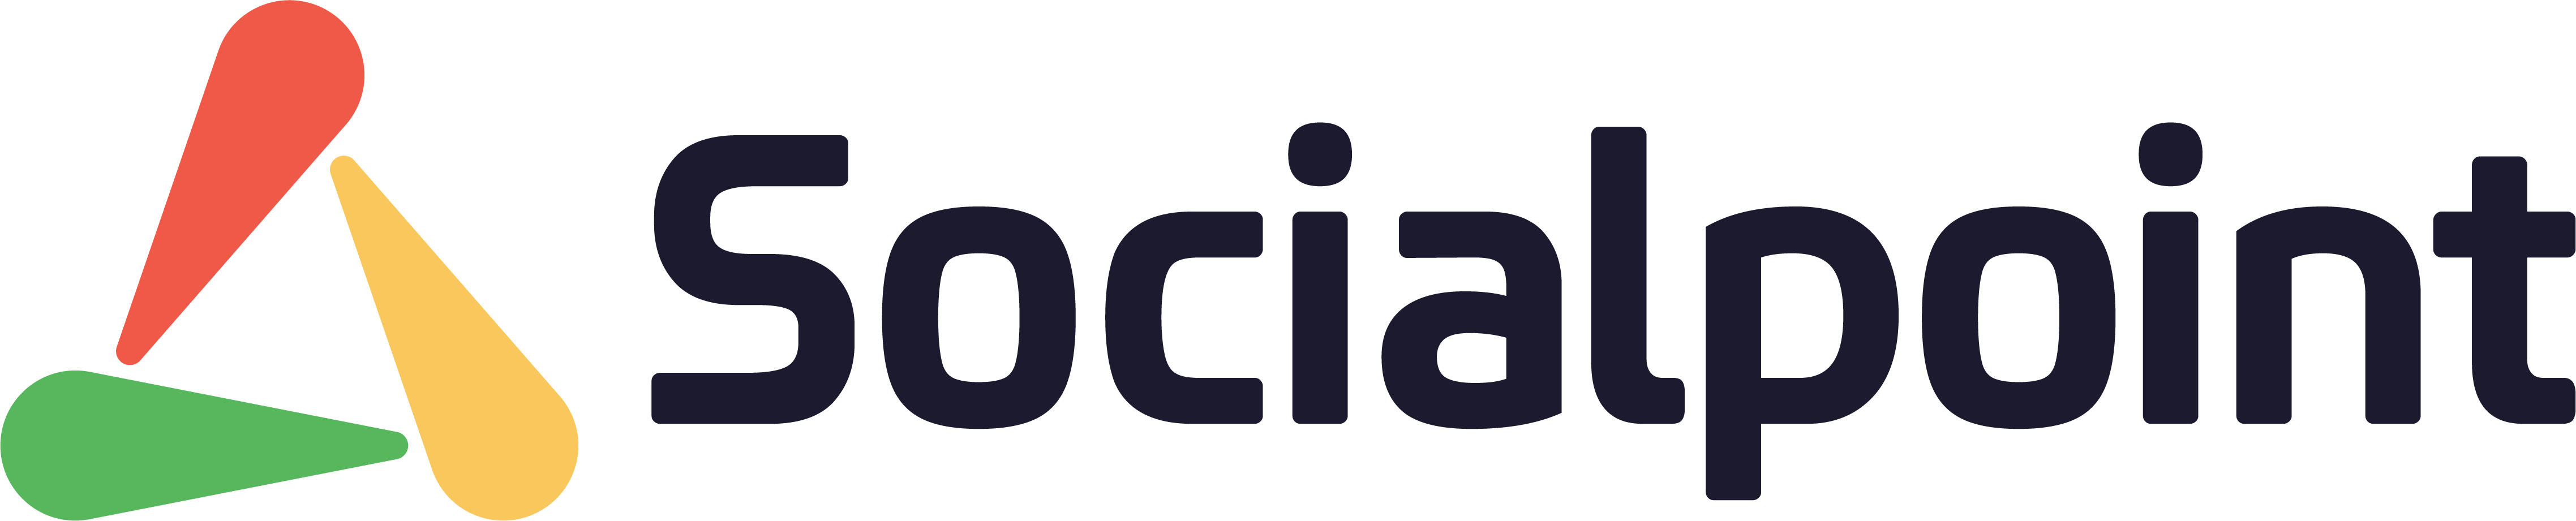 Socialpoint_logo